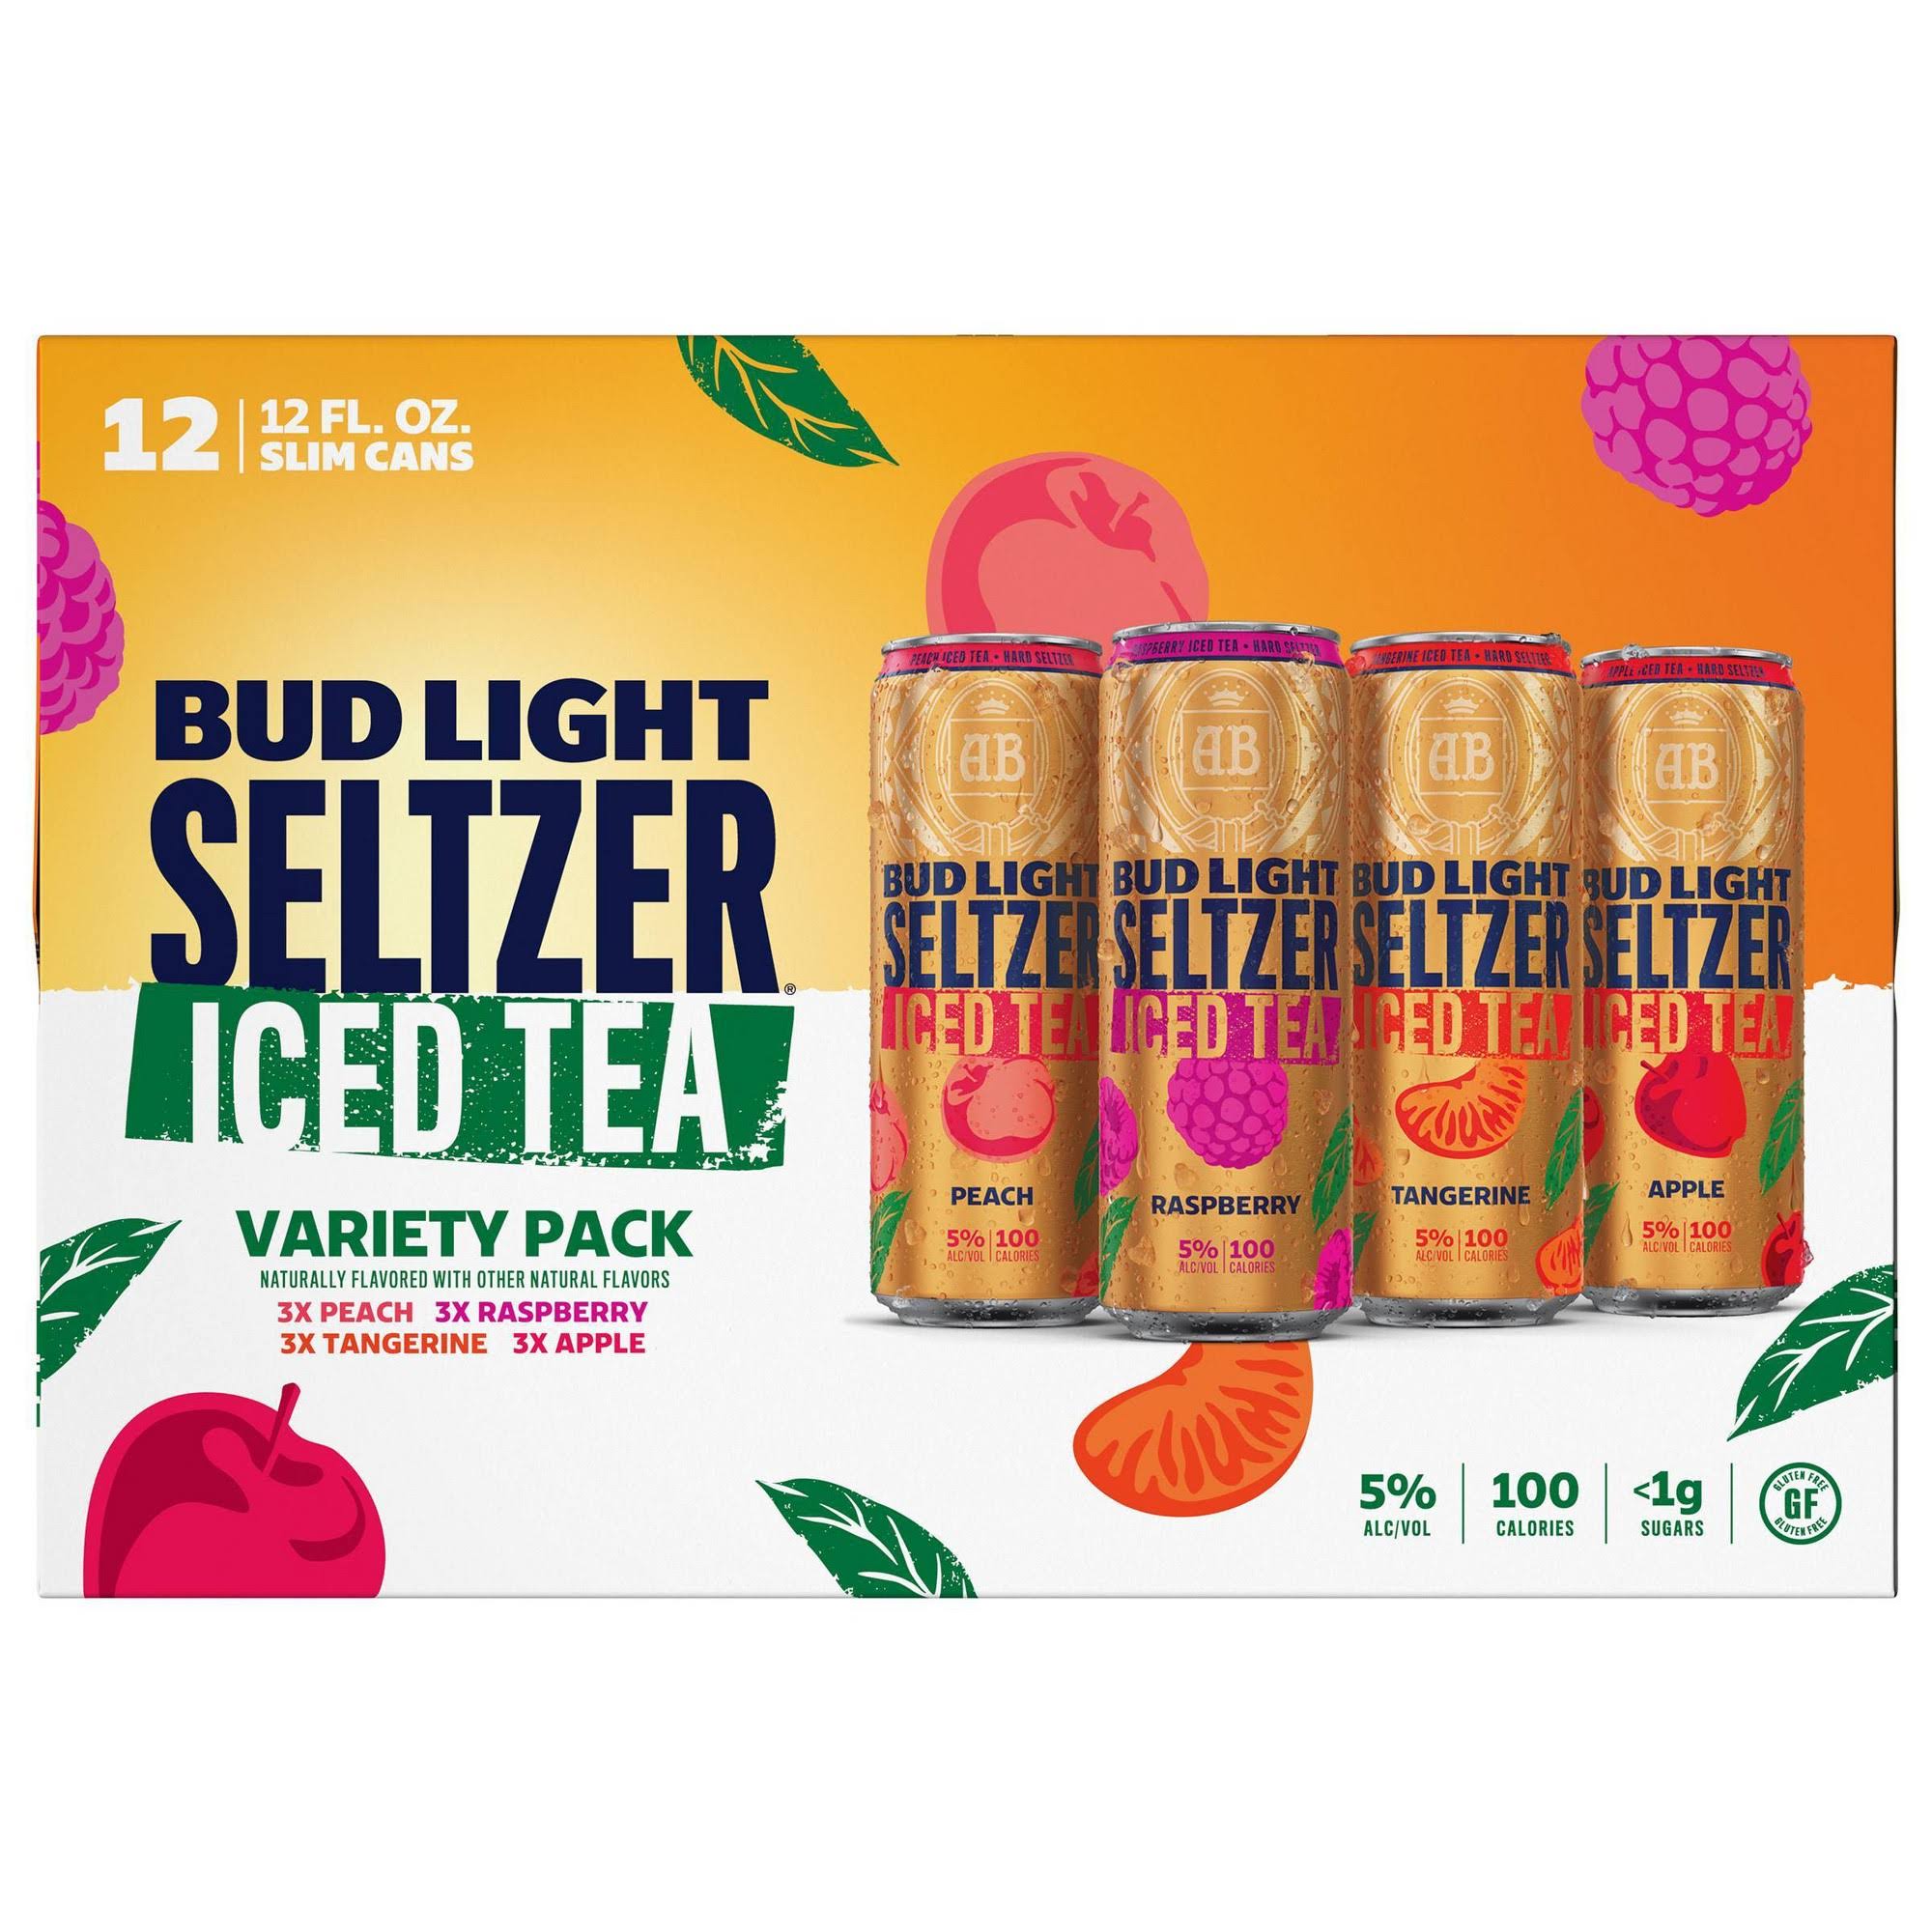 Bud Light Beer, Seltzer, Iced Tea, Variety Pack - 12 pack, 12 fl oz cans